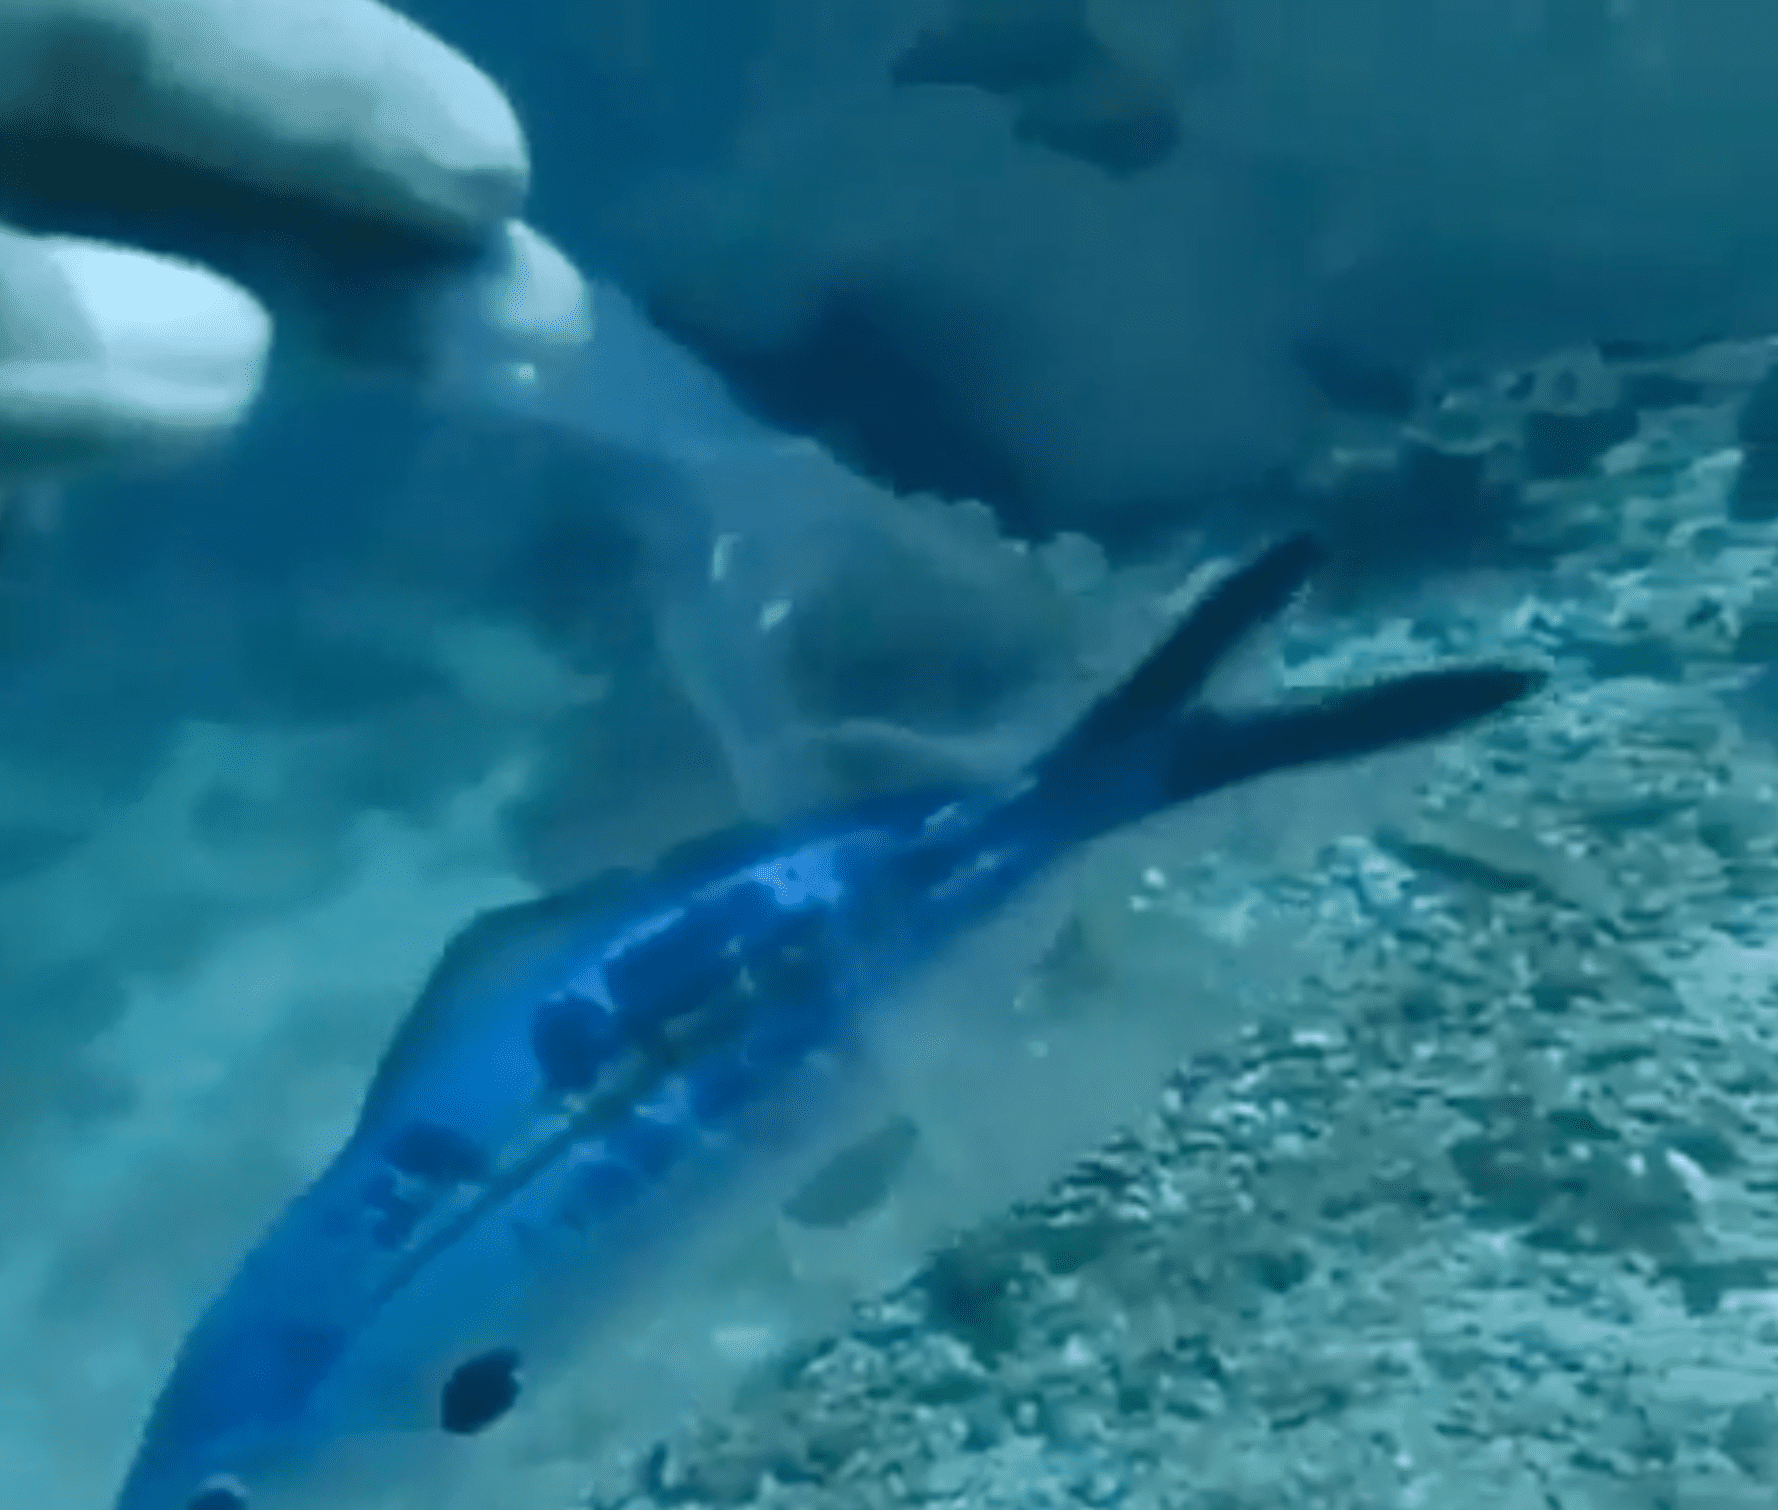 Fish stuck inside a plastic bag | Photo: Reddit/ThatDapperMosquito